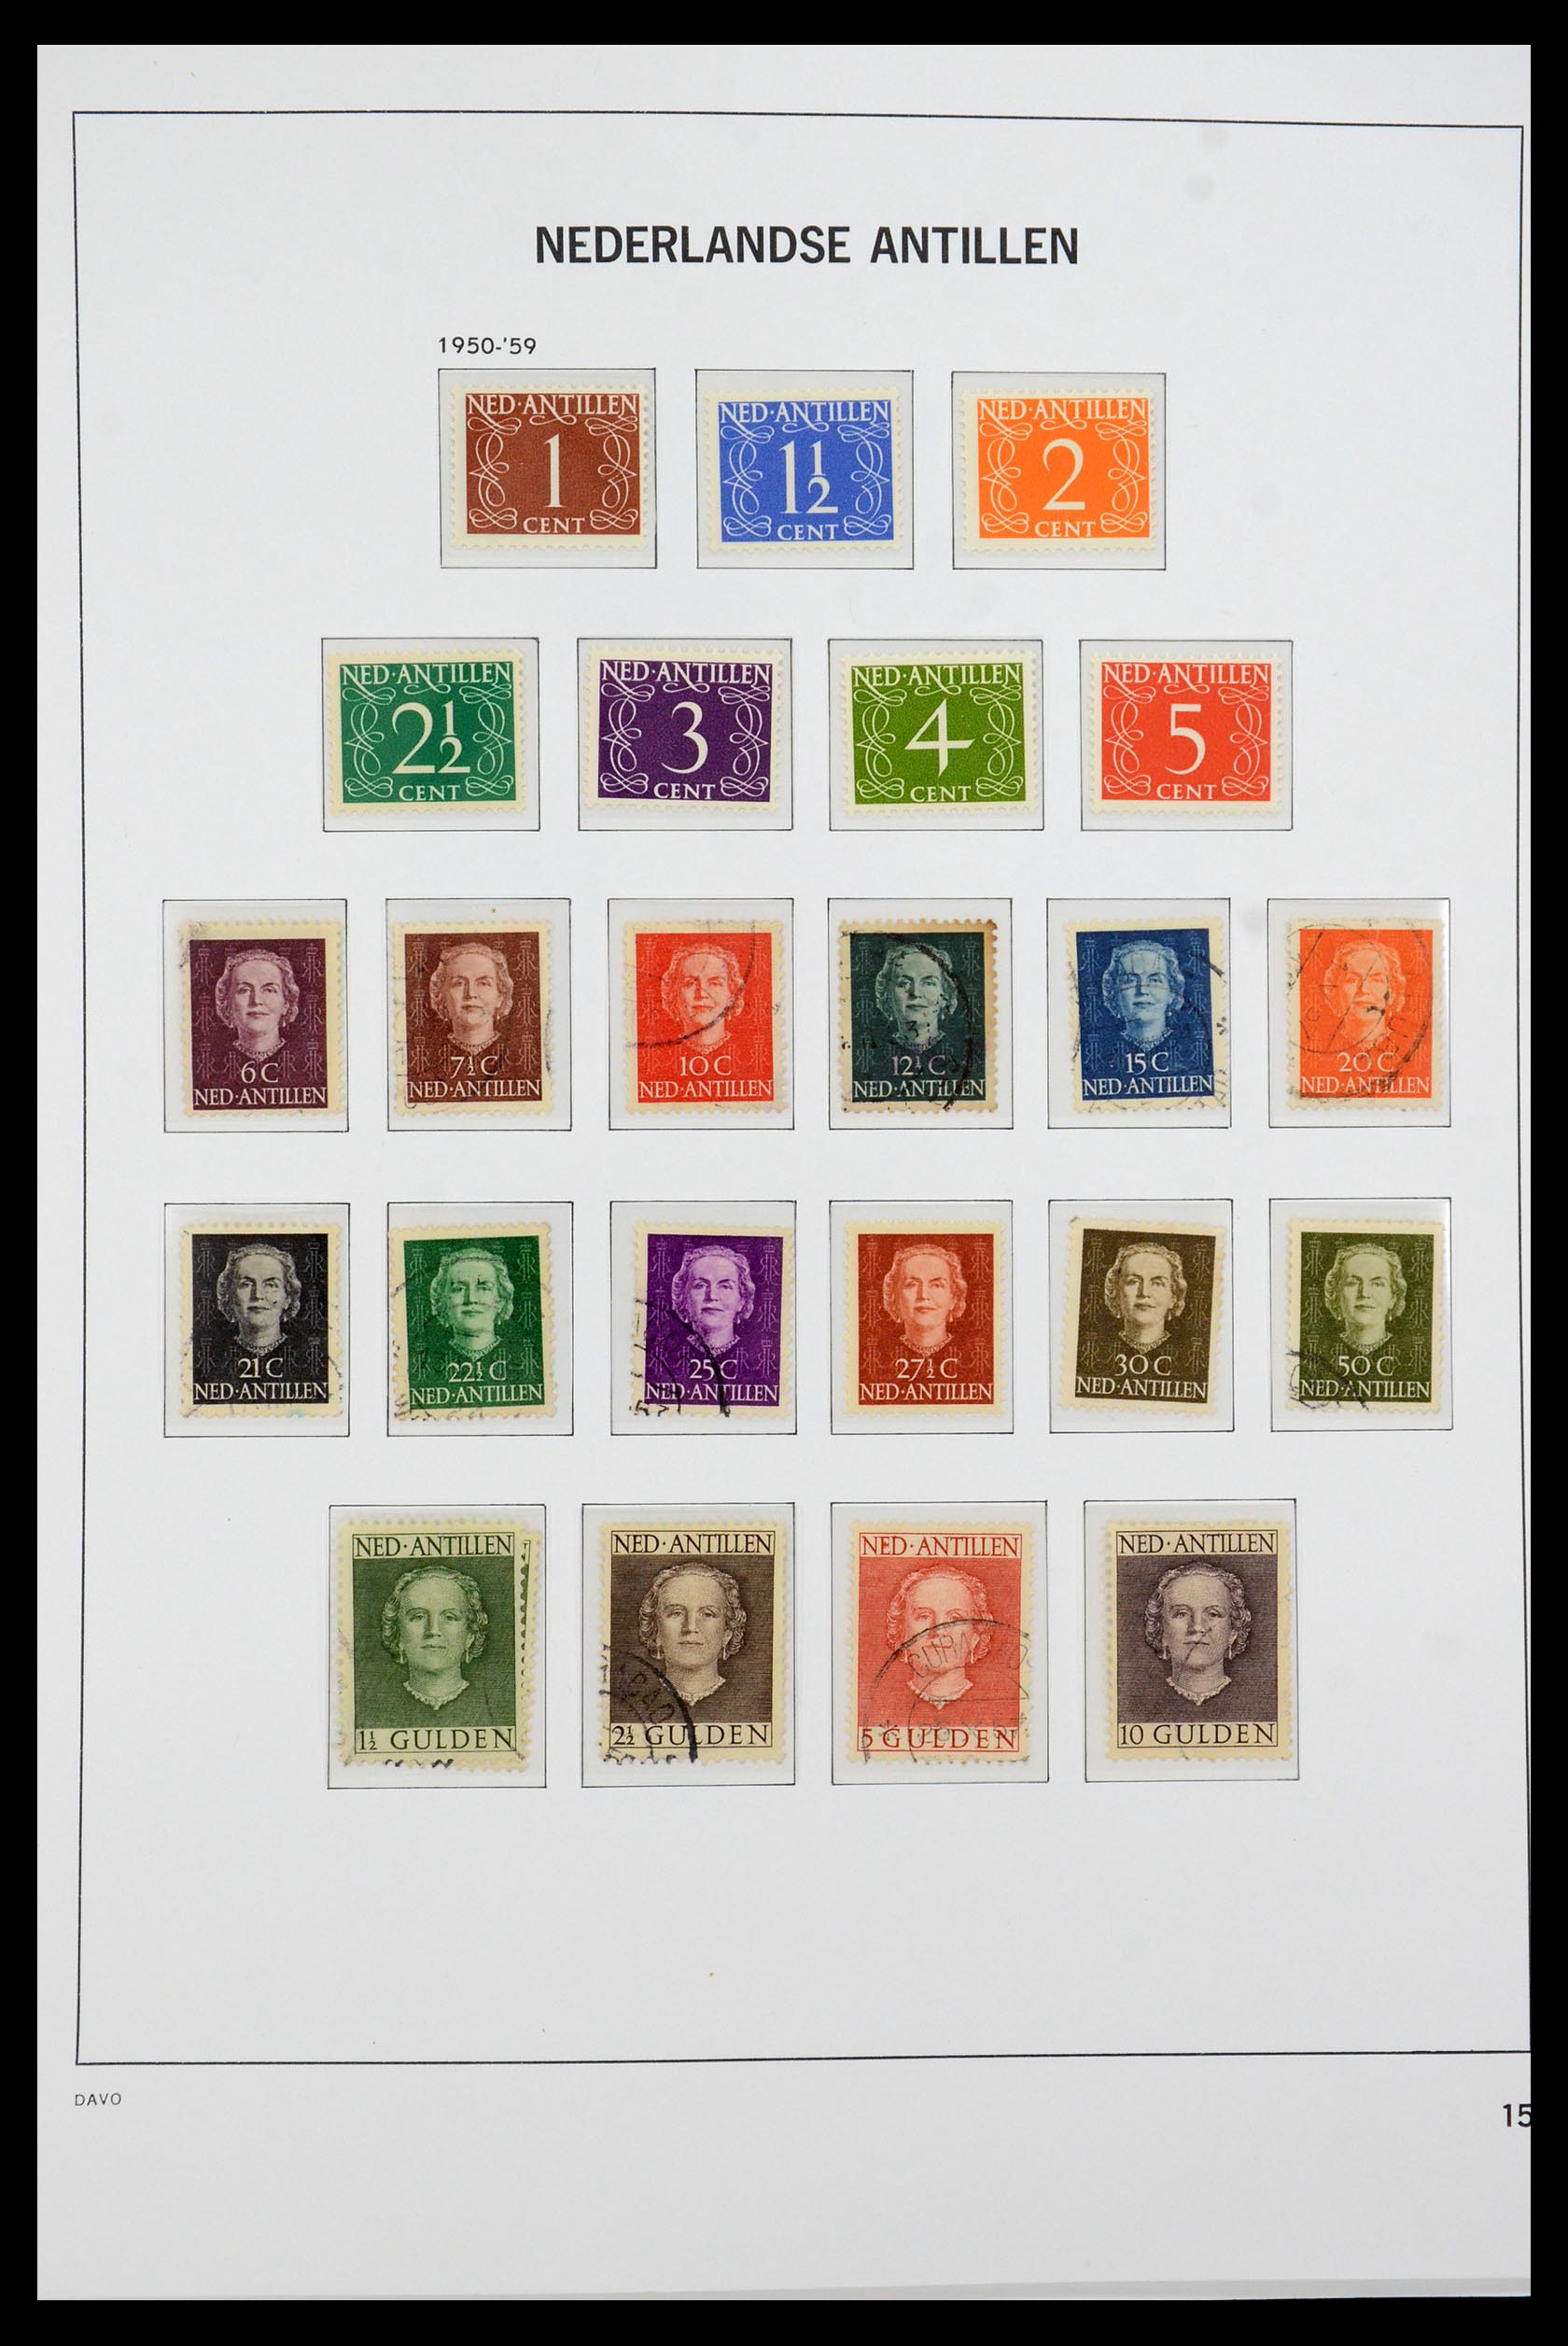 36393 002 - Stamp collection 36393 Netherlands Antilles 1949-2010.